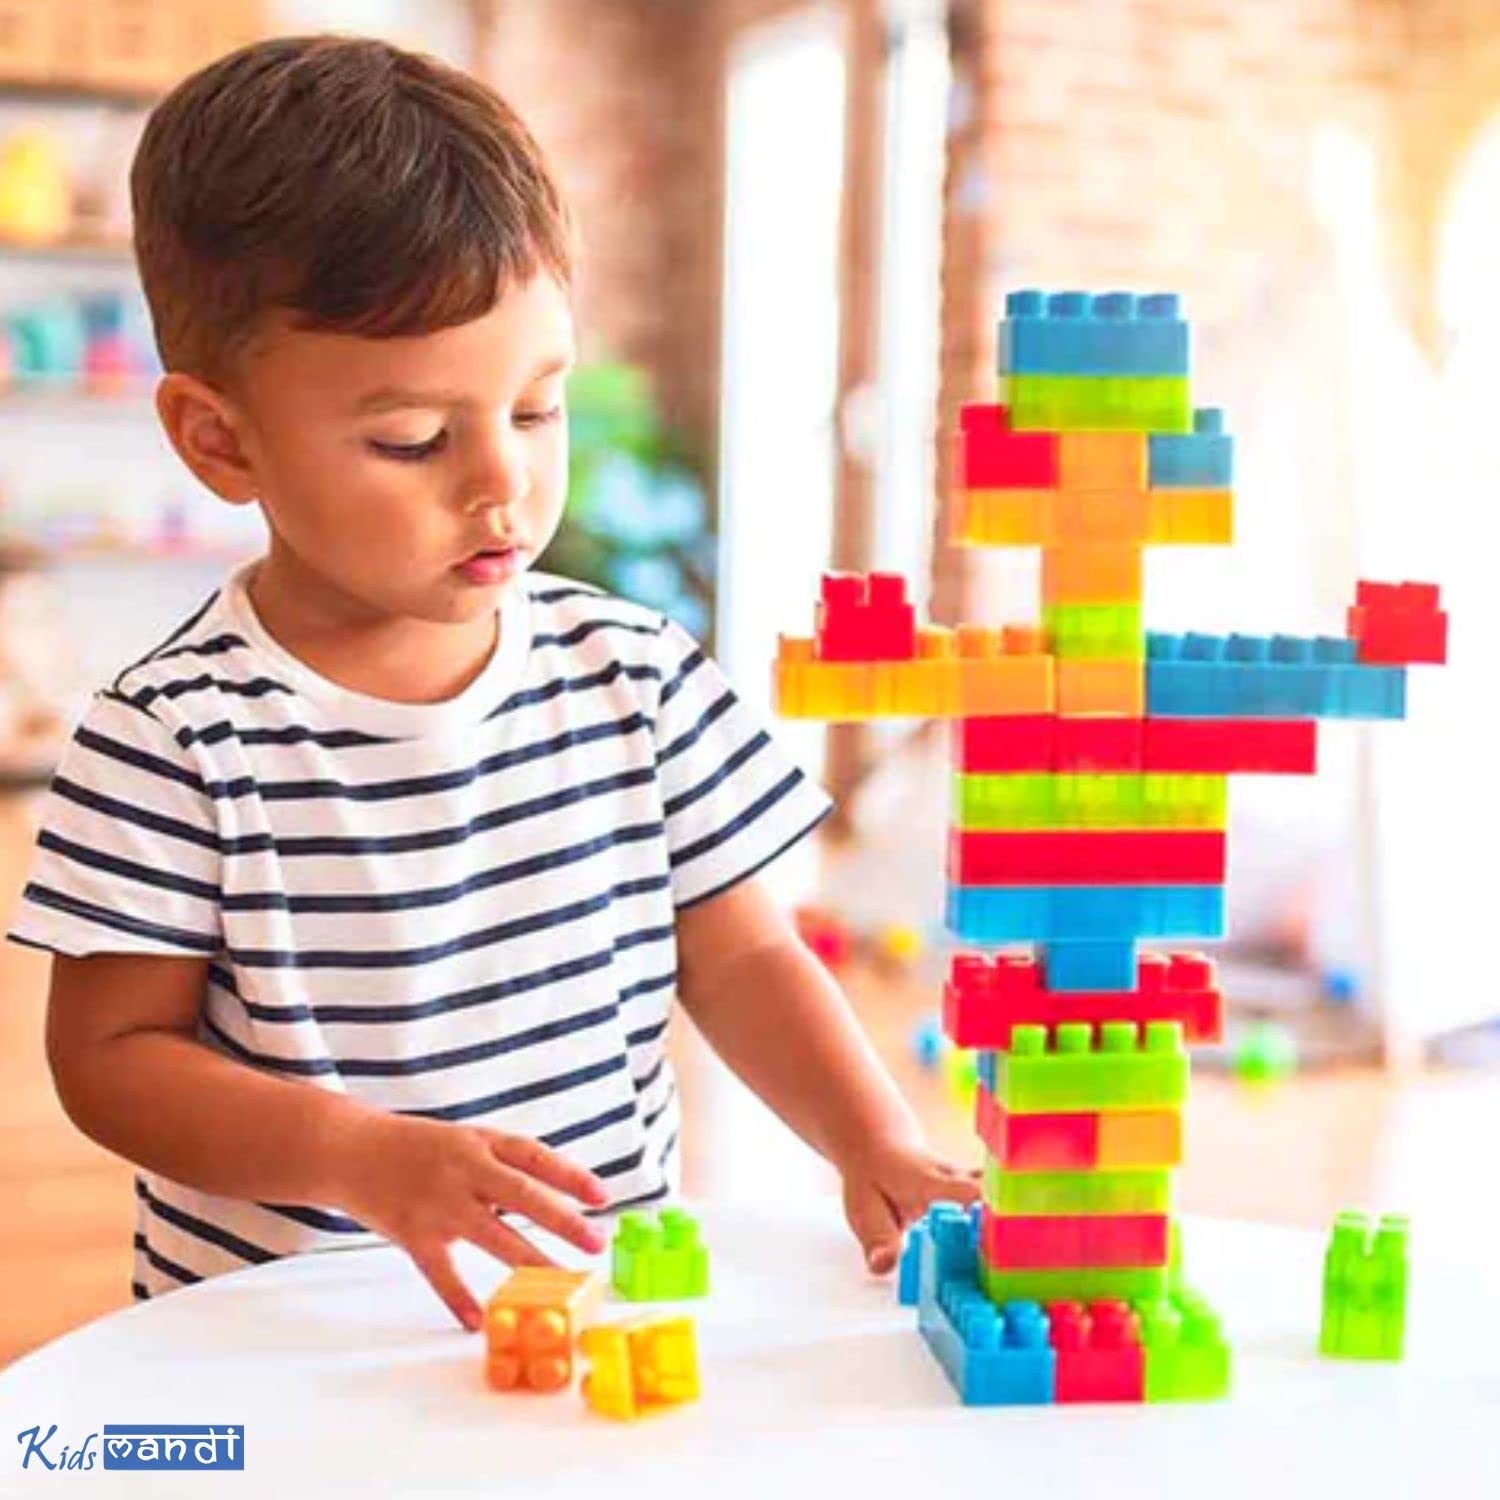 Kids Mandi - 88 pcs building blocks educational toy.